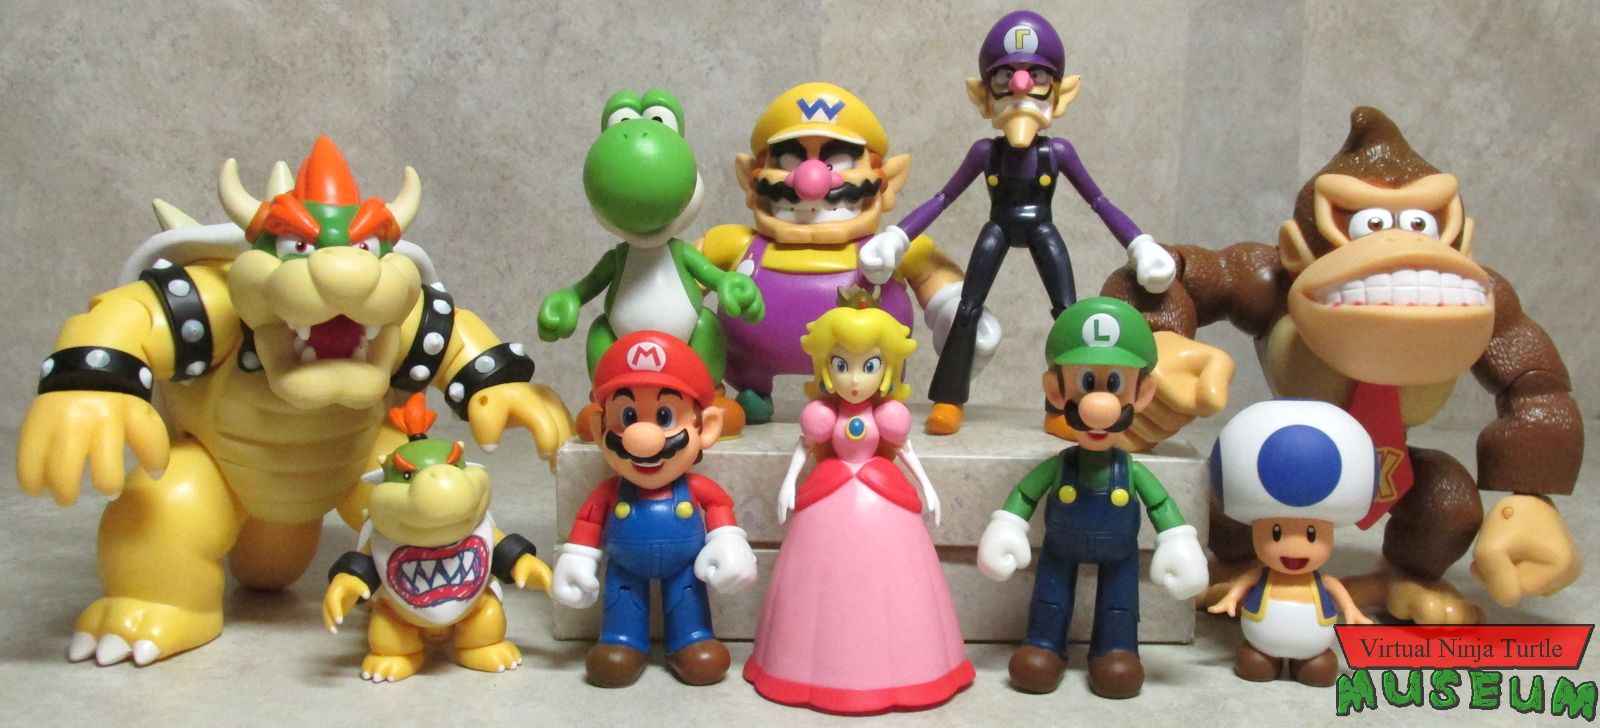 Super Mario Bros. figures